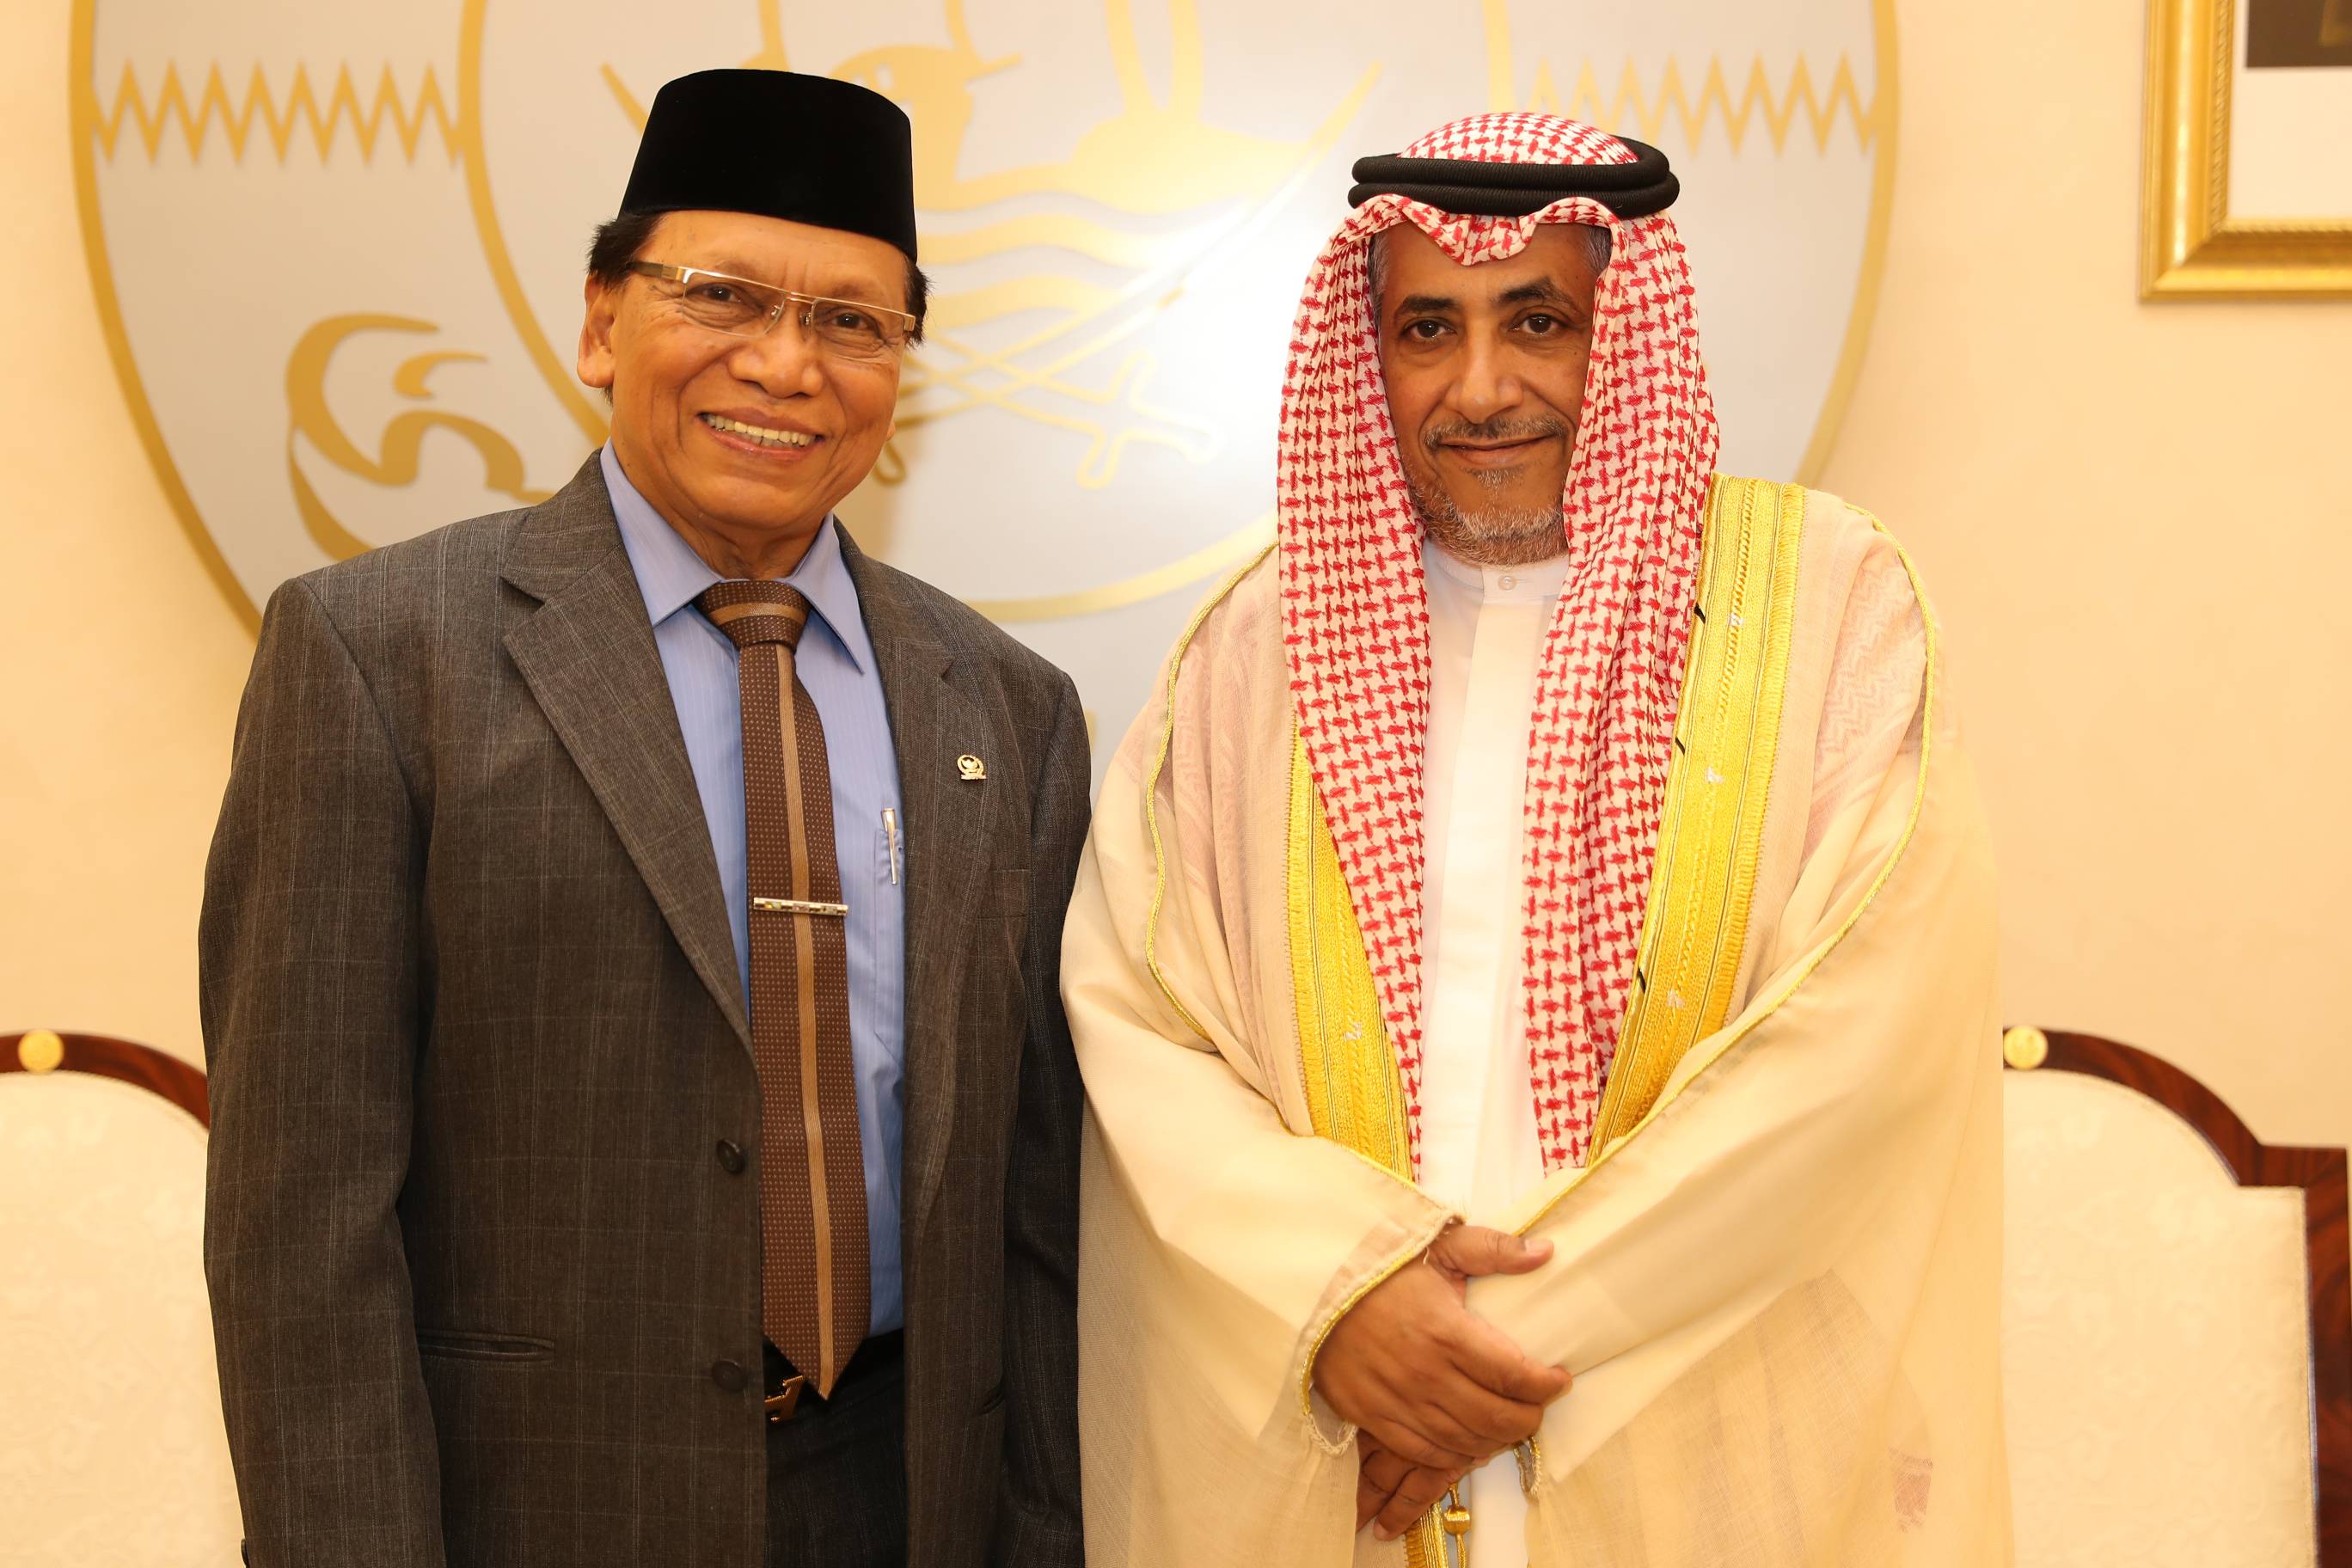 Advisory Council Deputy Speaker Meets Vice Chairman of Indonesia's Regional Representative Council